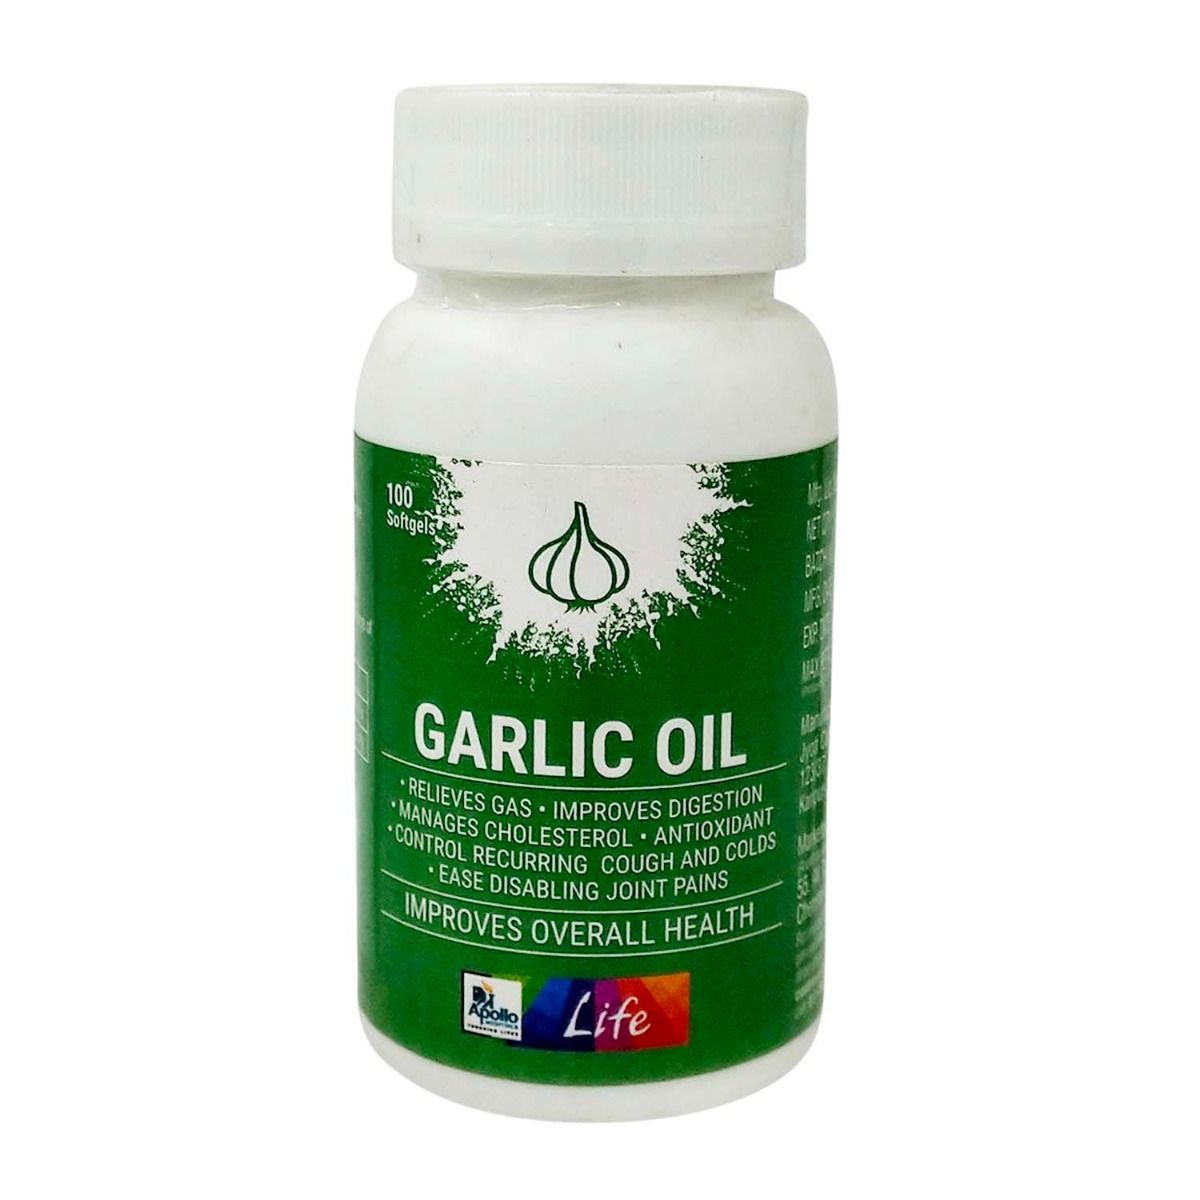 Buy Apollo Life Garlic Oil Softgel, 100 Capsules Online